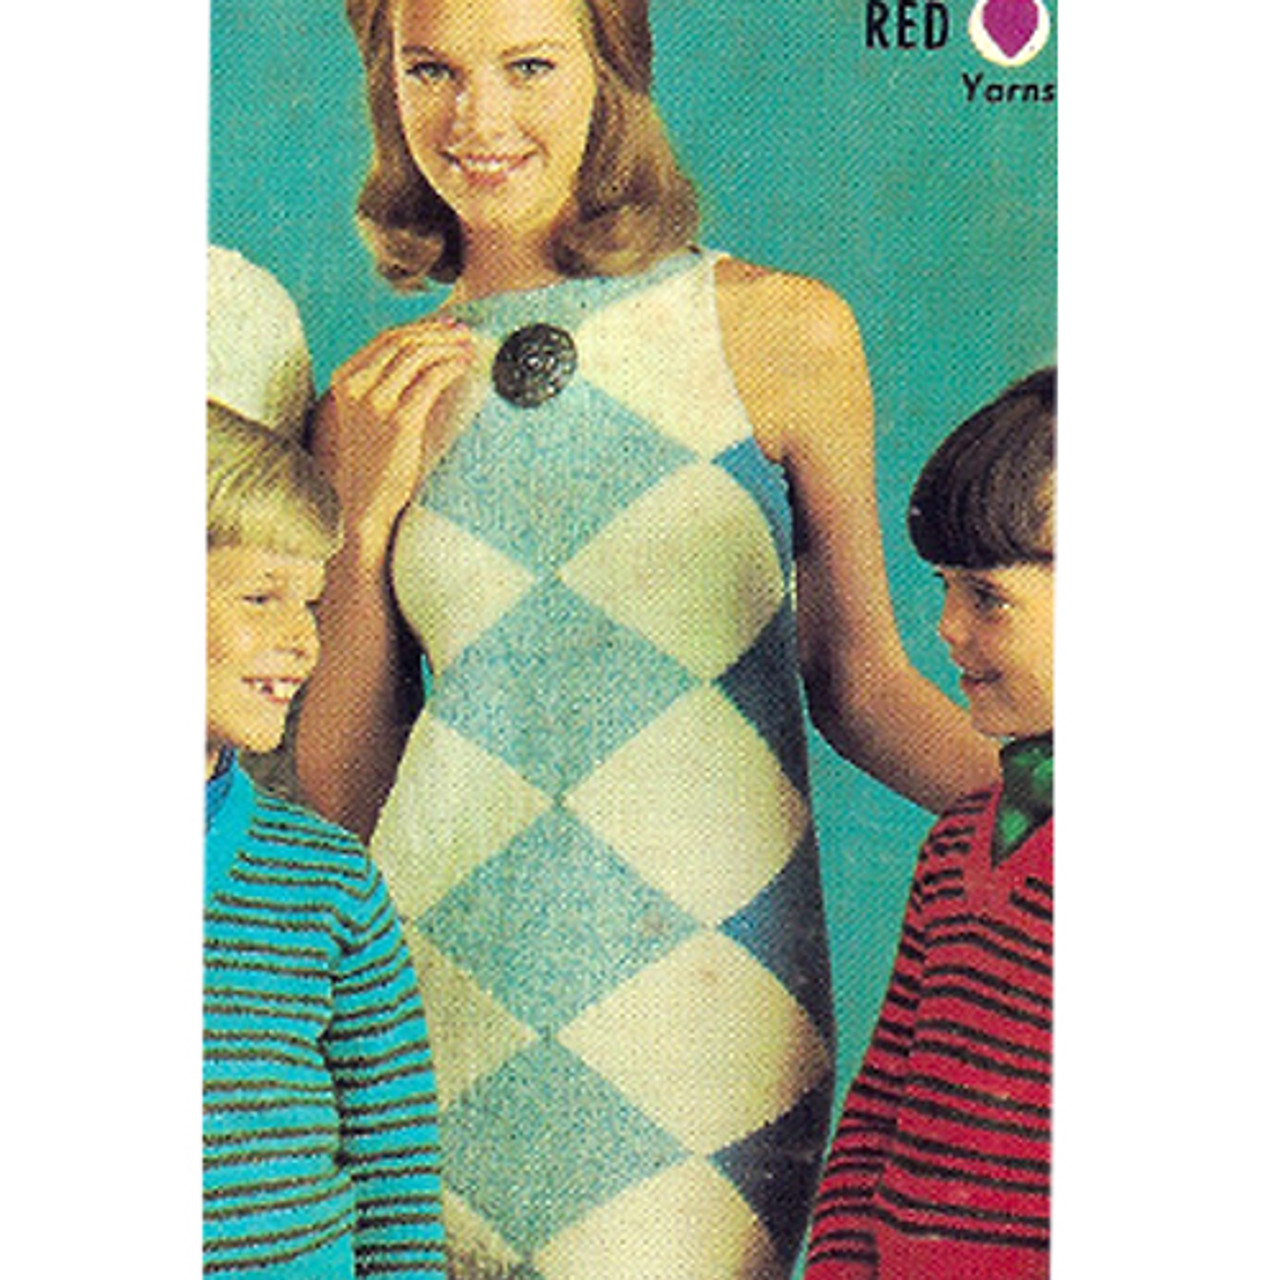 Sleeveless Knitted Argyle Dress pattern, Vintage 1960s